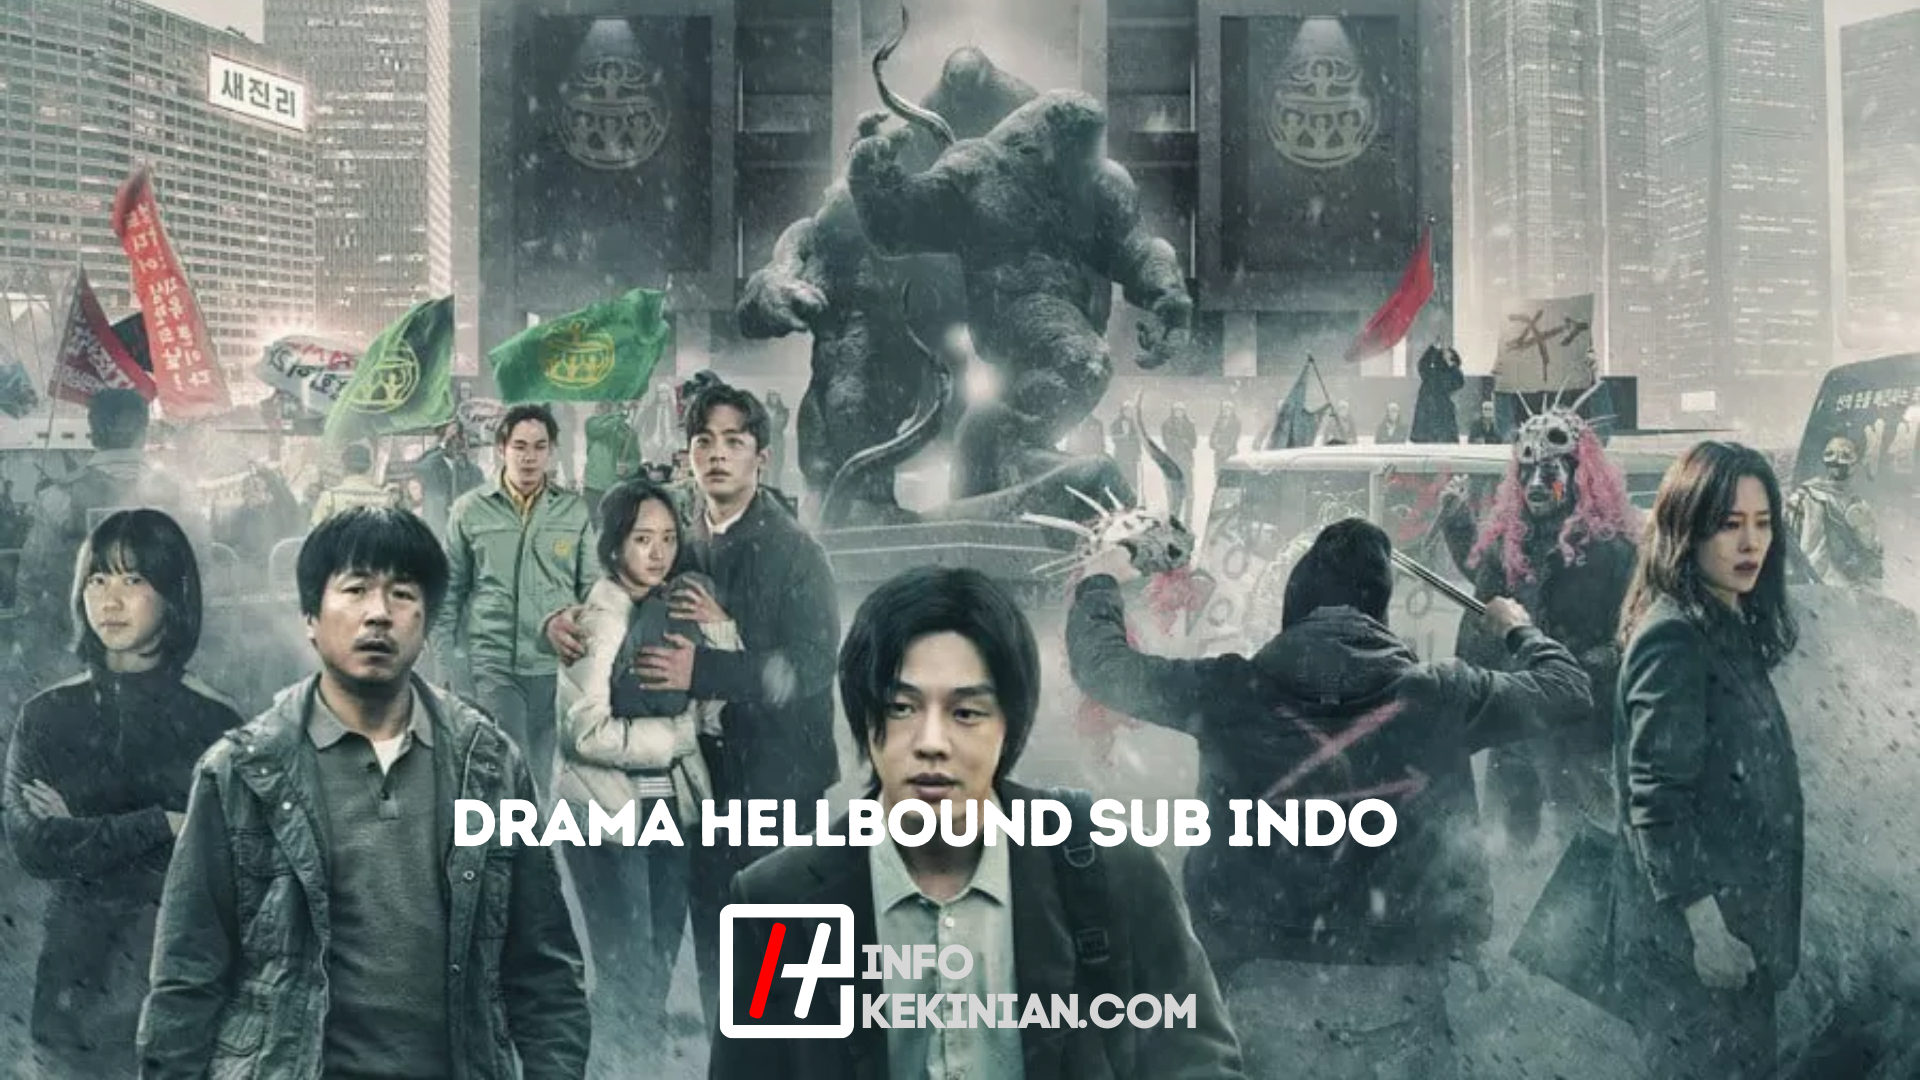 Link Nonton Drama Hellbound Sub Indo di Telegram